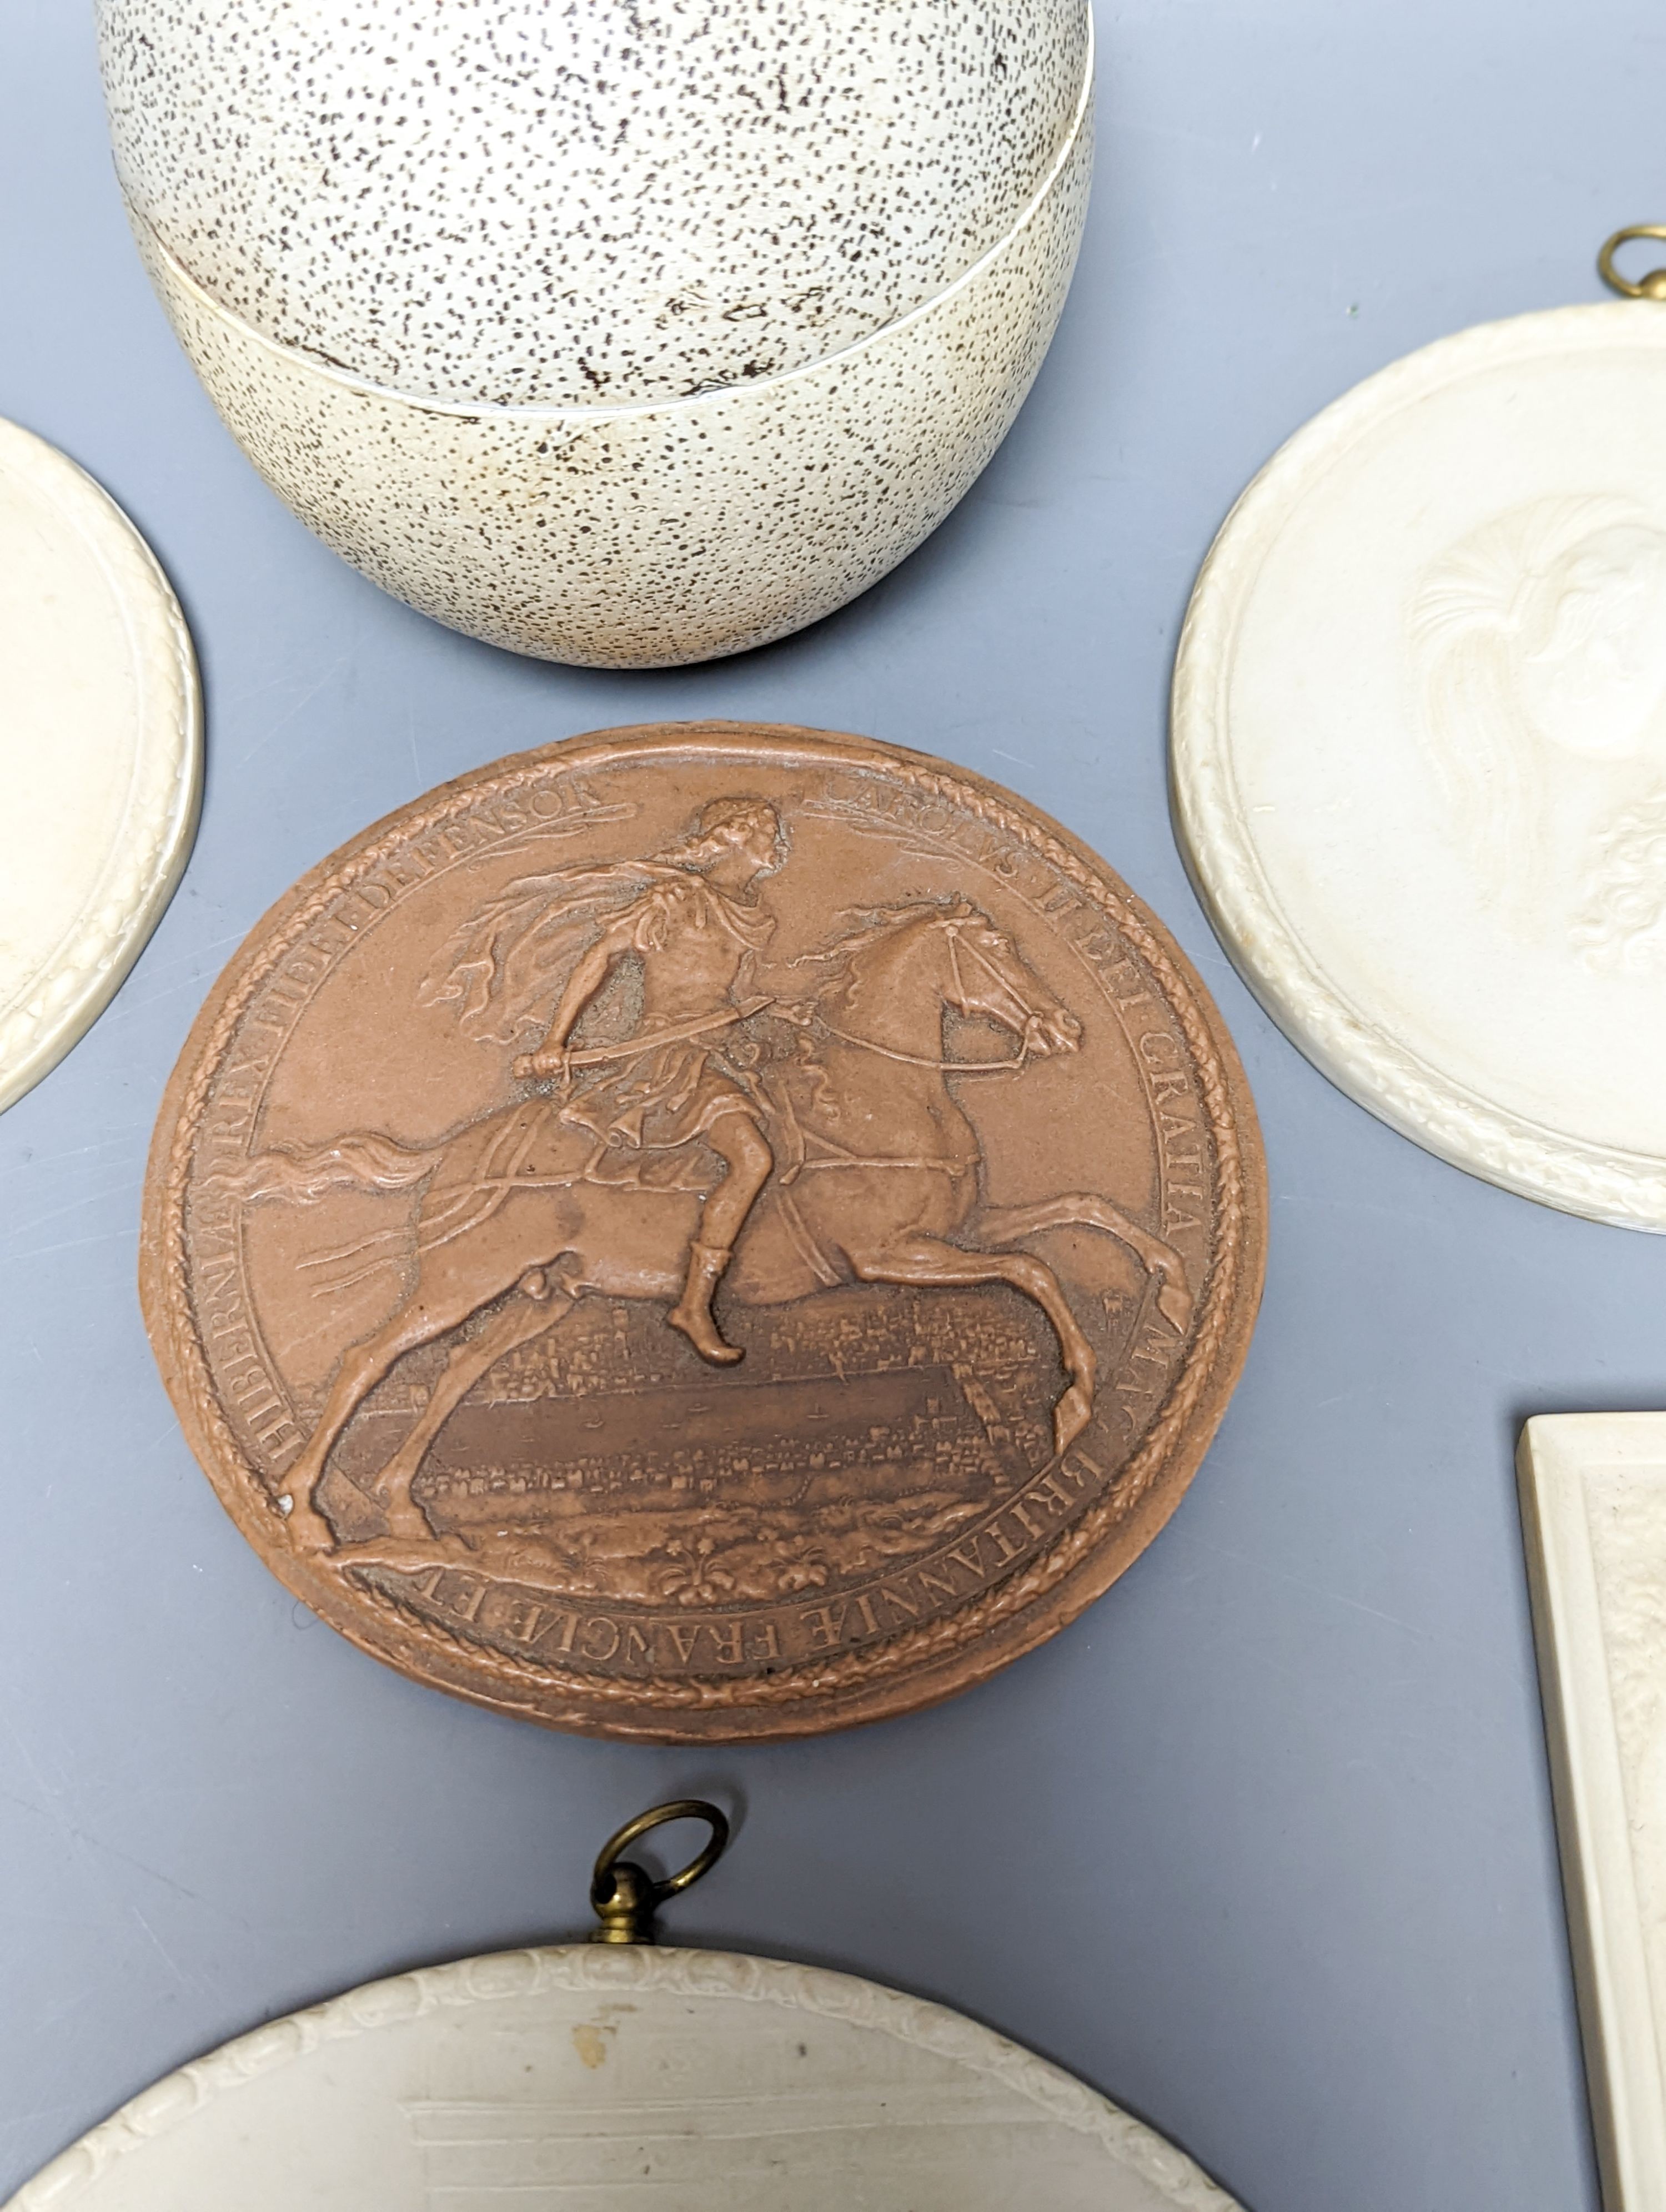 Decorative faux marble roundels, plaques and a faux ostrich egg box 28cm